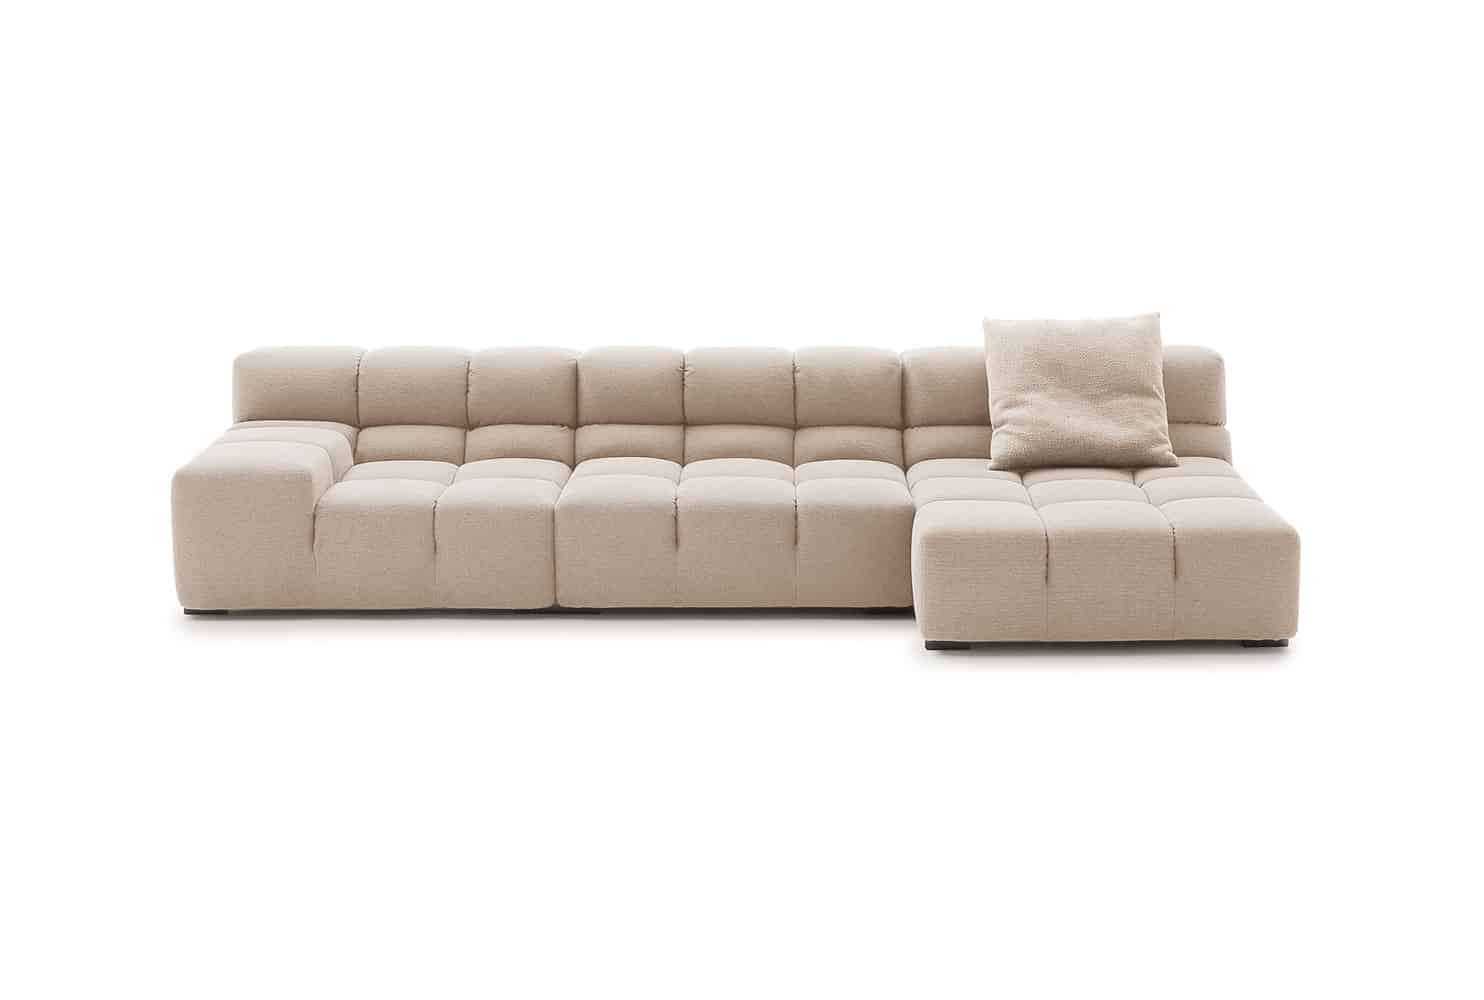 original-tufty-time-sofa-bb-italia-4.jpg